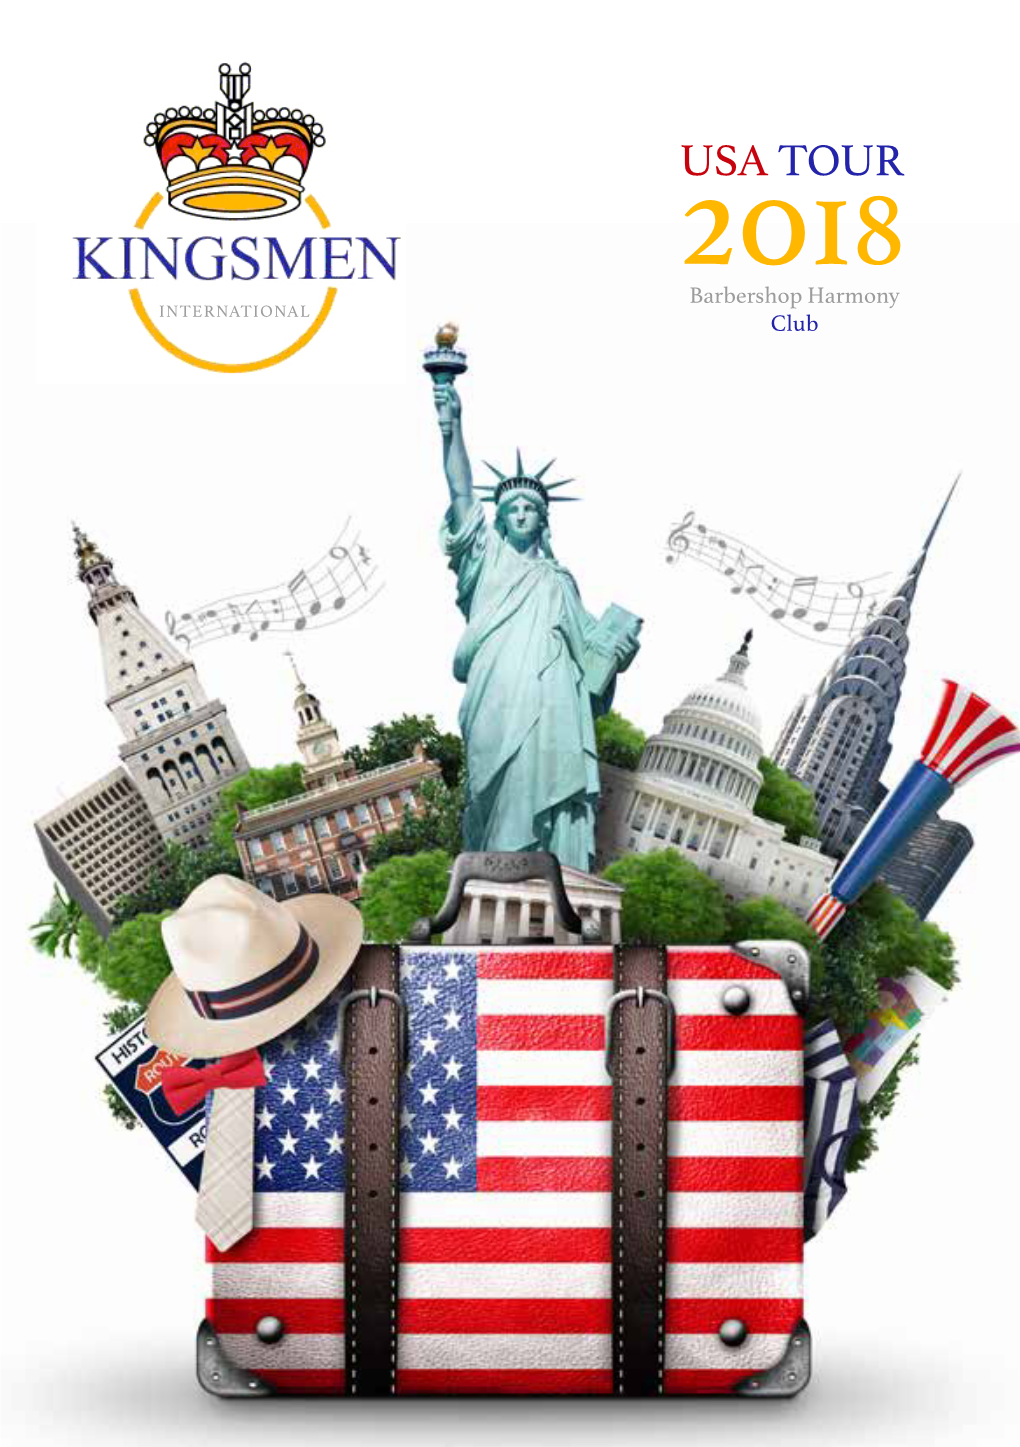 USA TOUR 8 2Barbershop01 Harmony INTERNATIONAL Club the Kingsmen